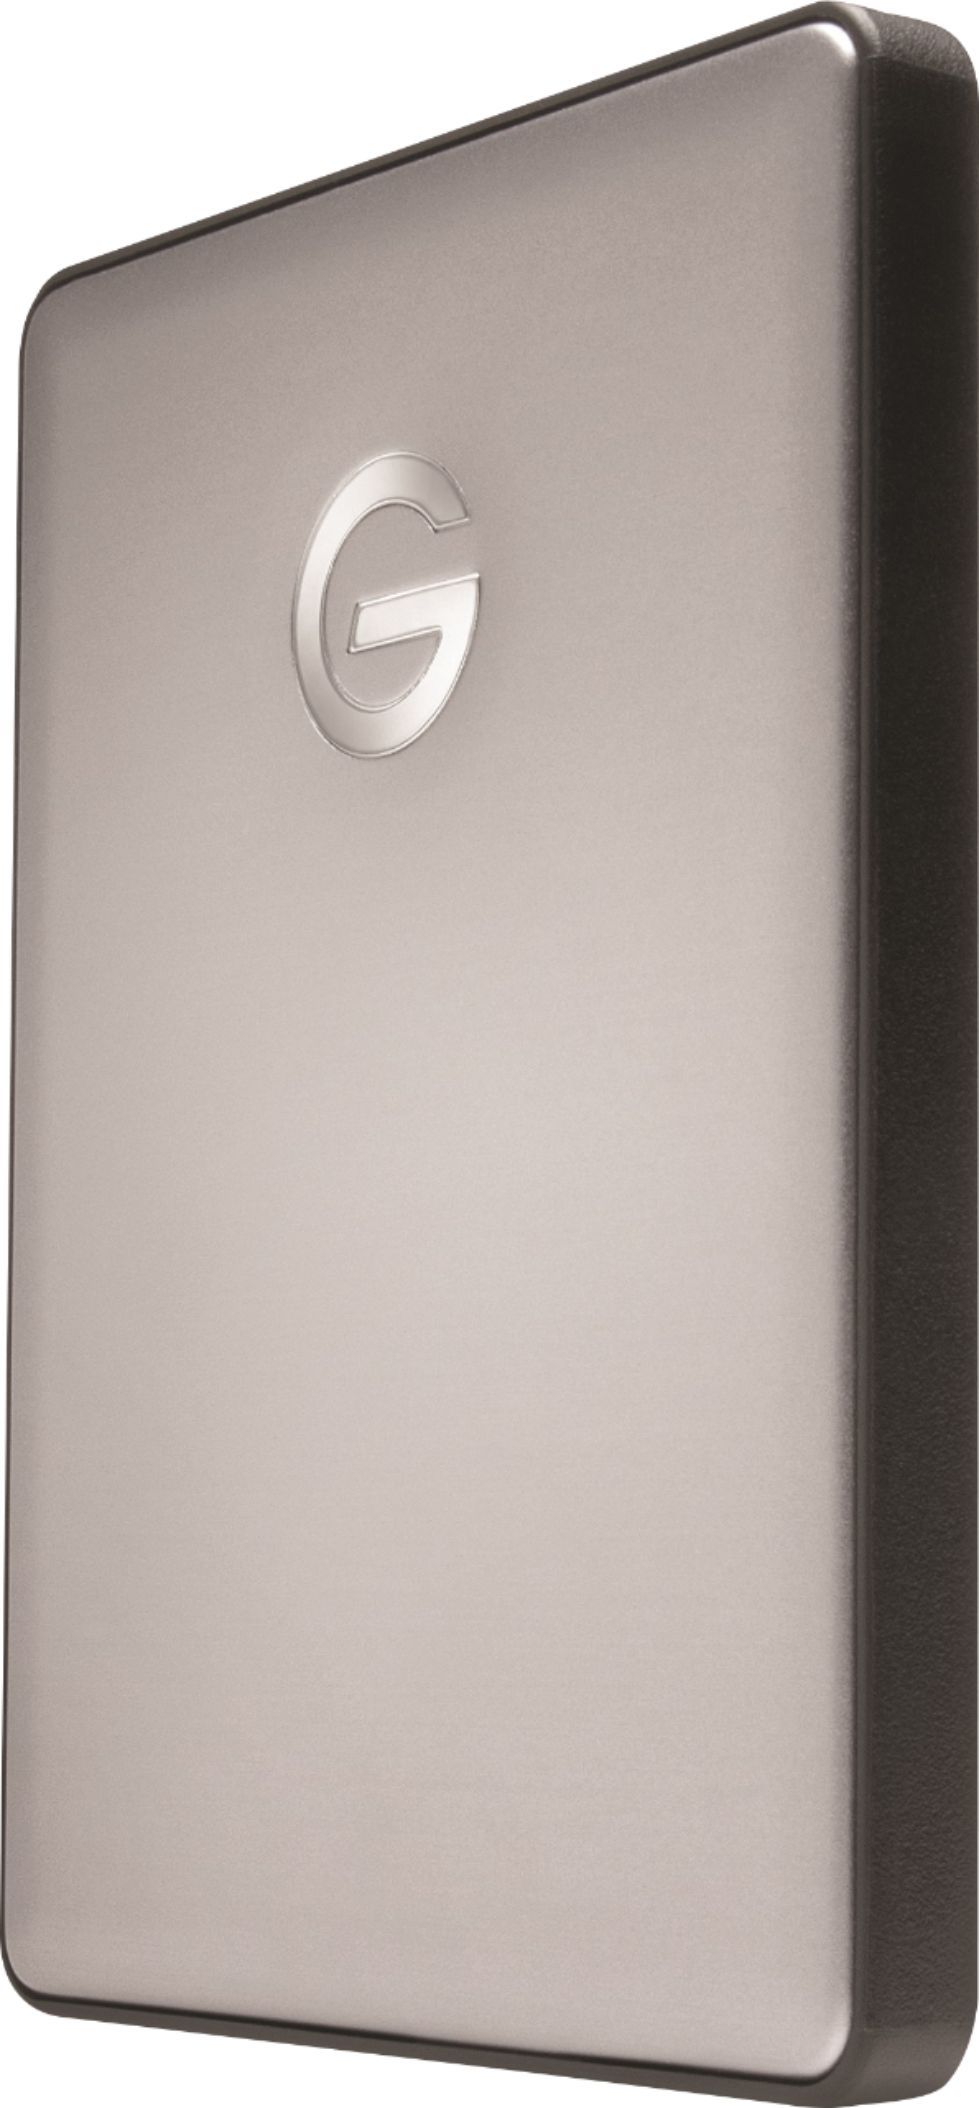 G-Technology G-DRIVE mobile USB-C 1TB External USB 3.1 Gen 1 Portable Hard Drive Space Gray 0G102... | Best Buy U.S.